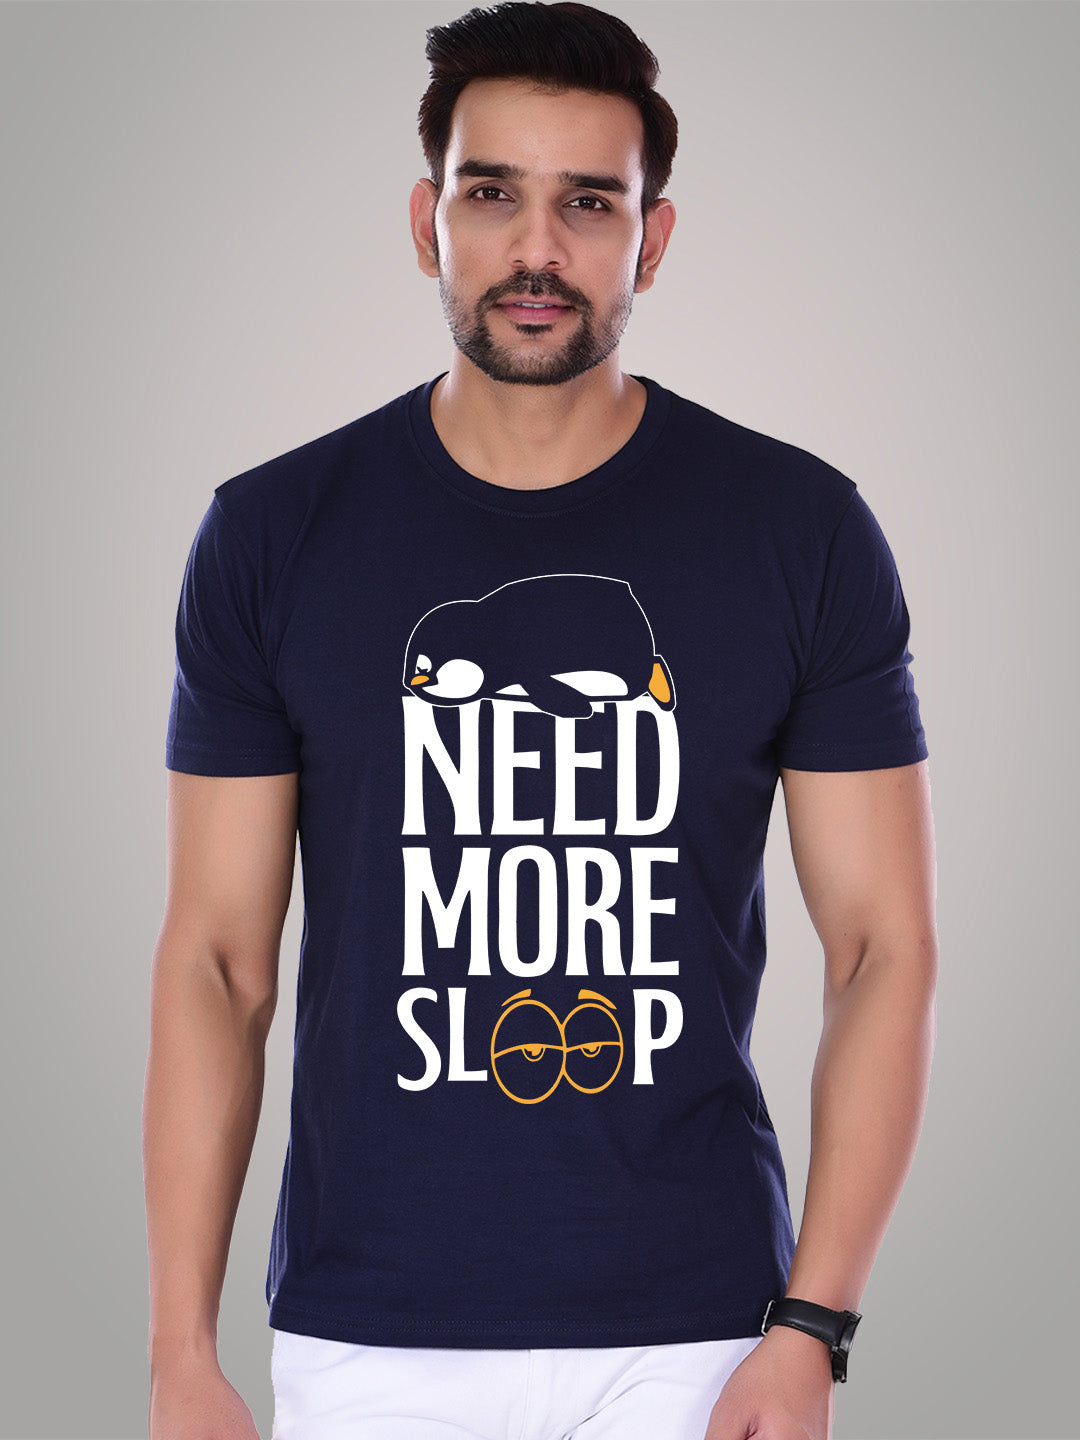 Need More Sleep Blue T-Shirt